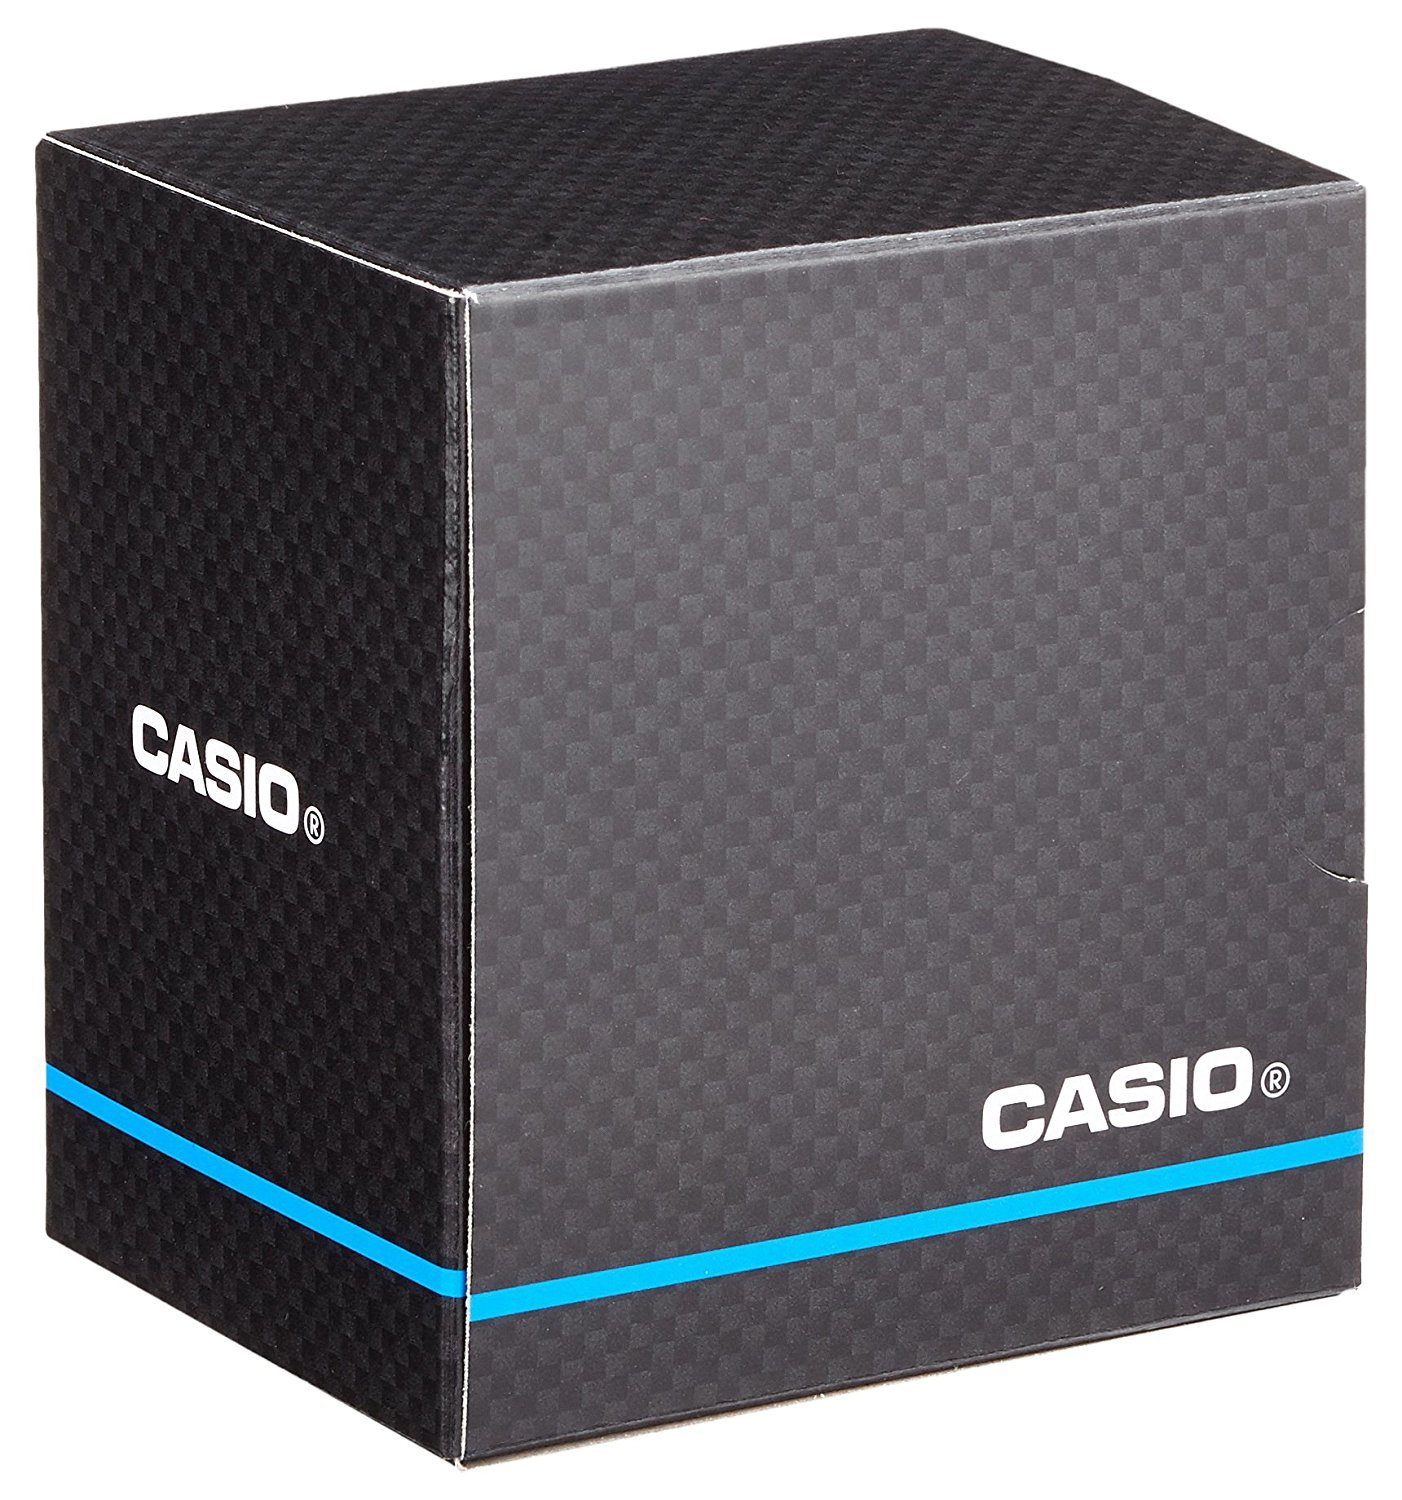 Casio Collection Unisex-Armbanduhr